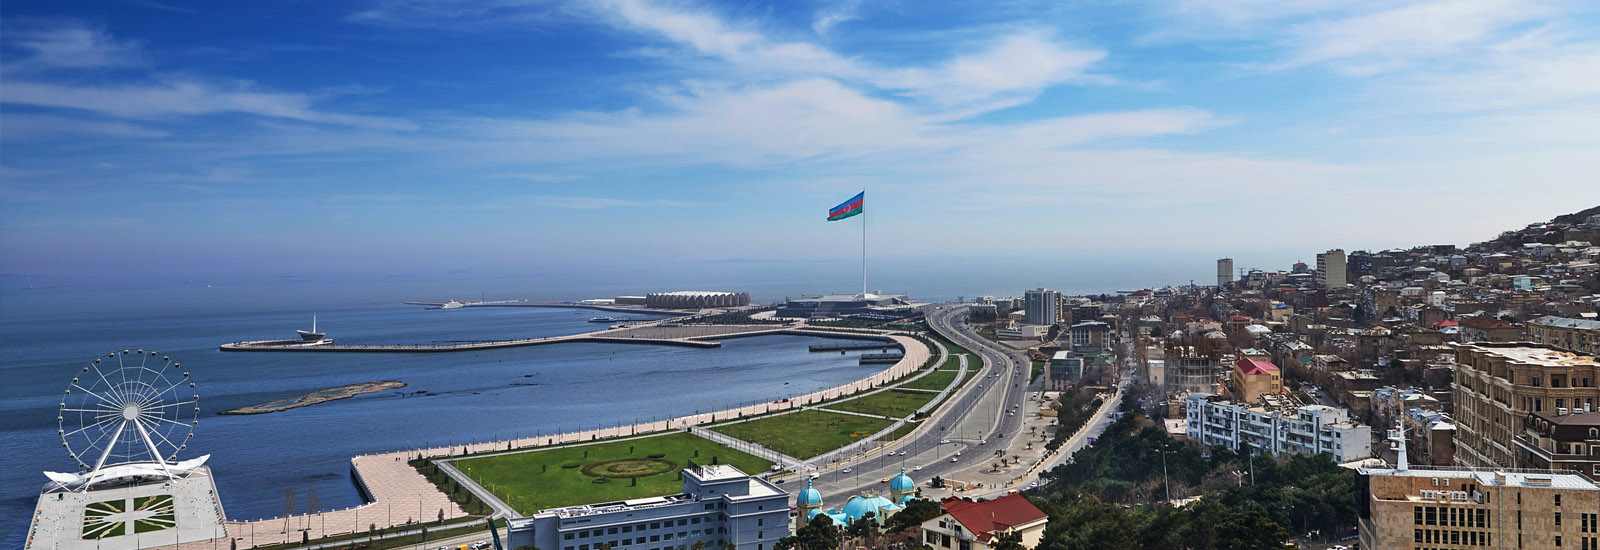 Beautiful landscape view of Azerbaijan coastline